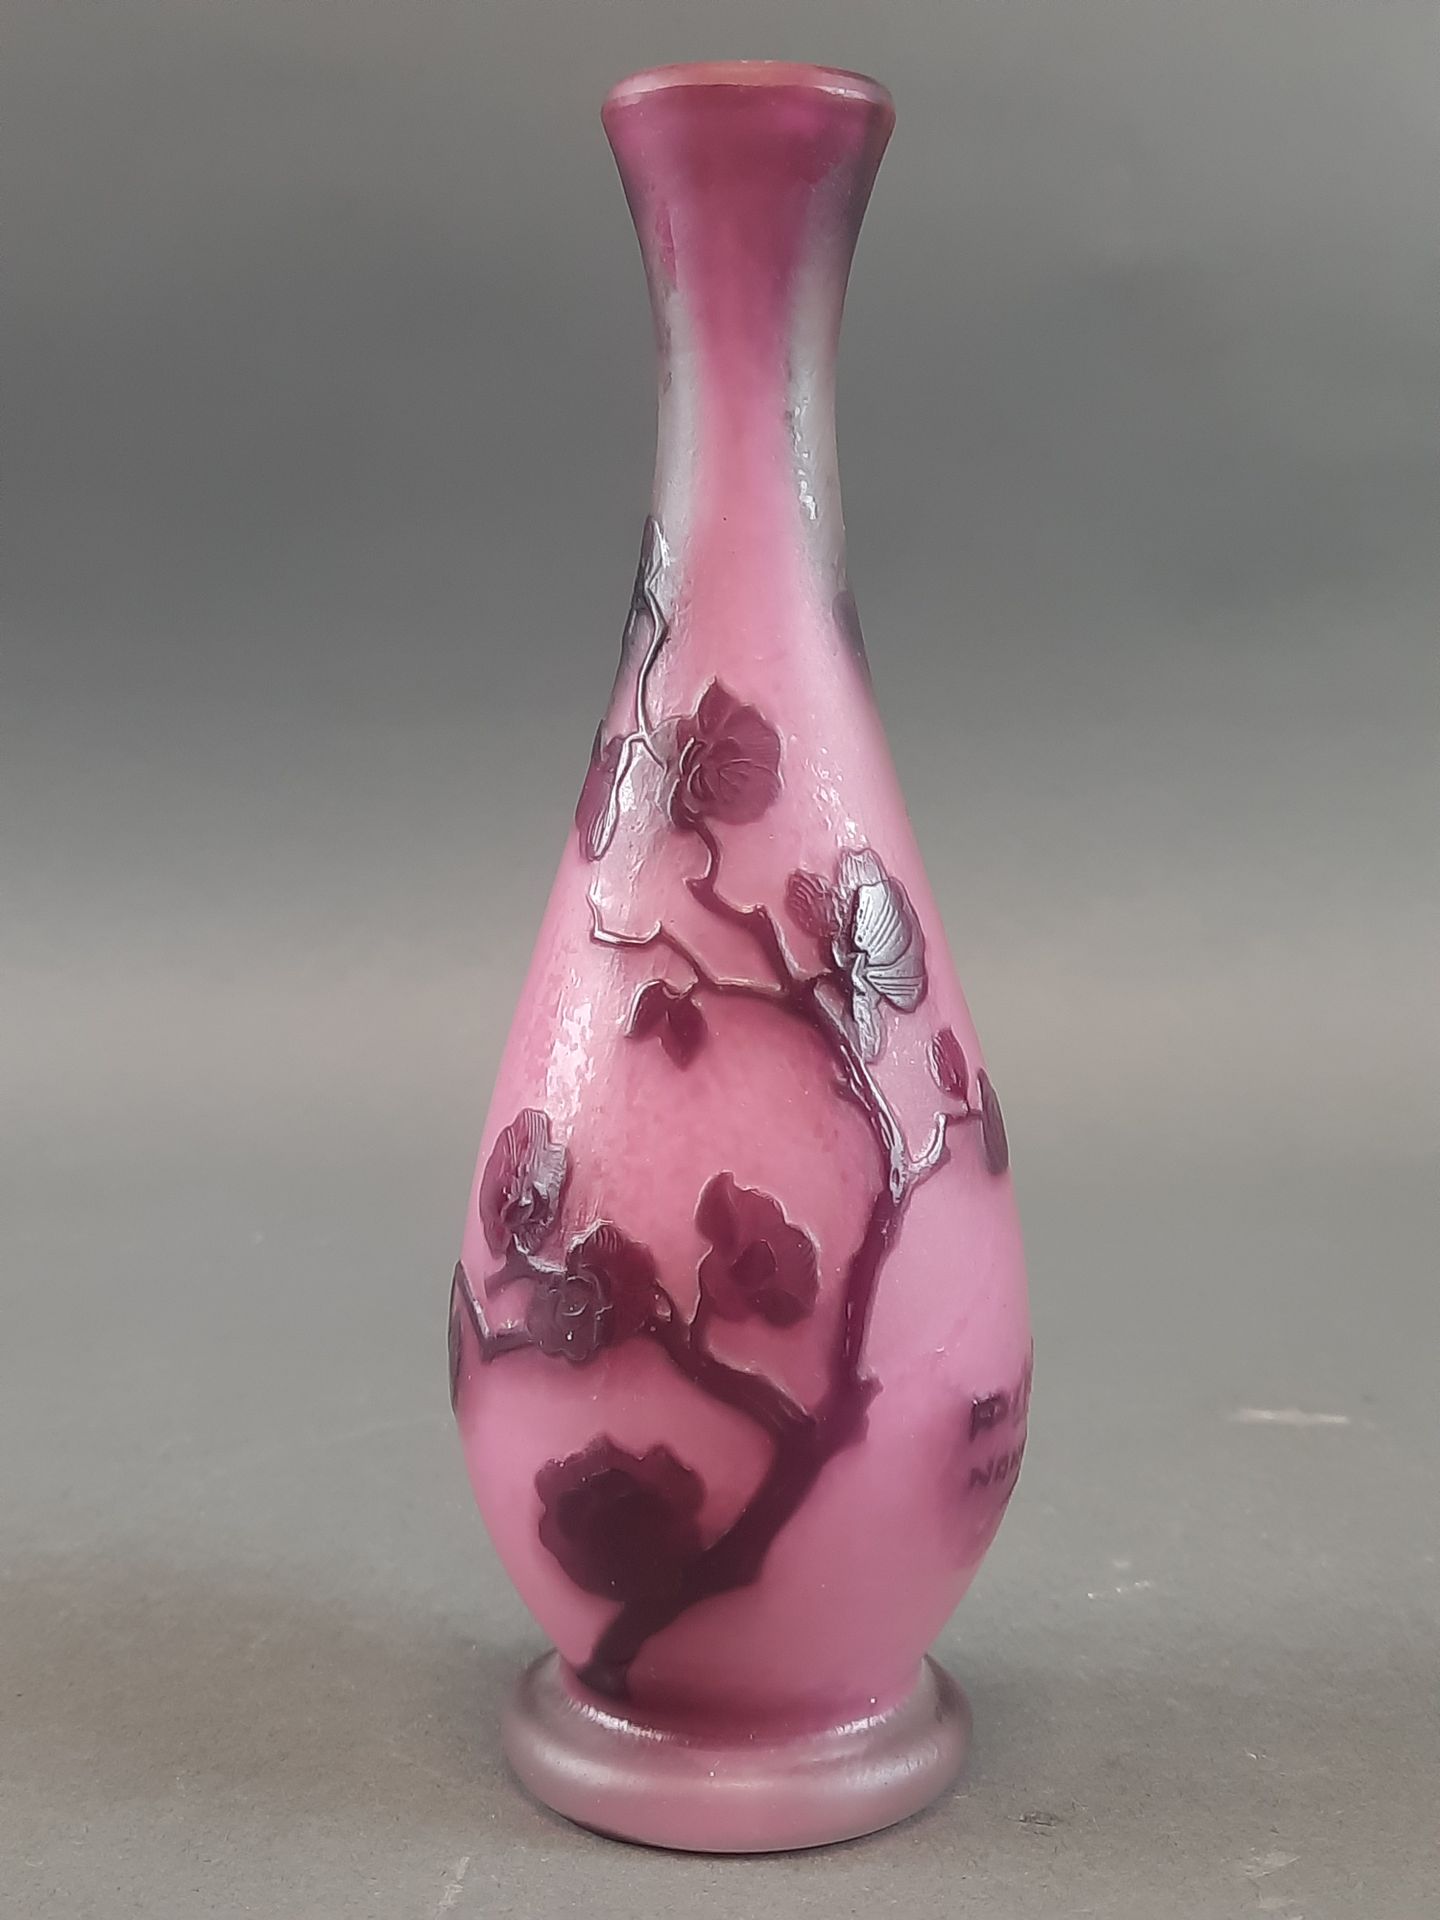 Null 安德烈-德拉特（André DELATTE）出演《南希》。一个小的玻璃花瓶，上面浮雕着一棵开花的樱桃树的图案。高：16厘米